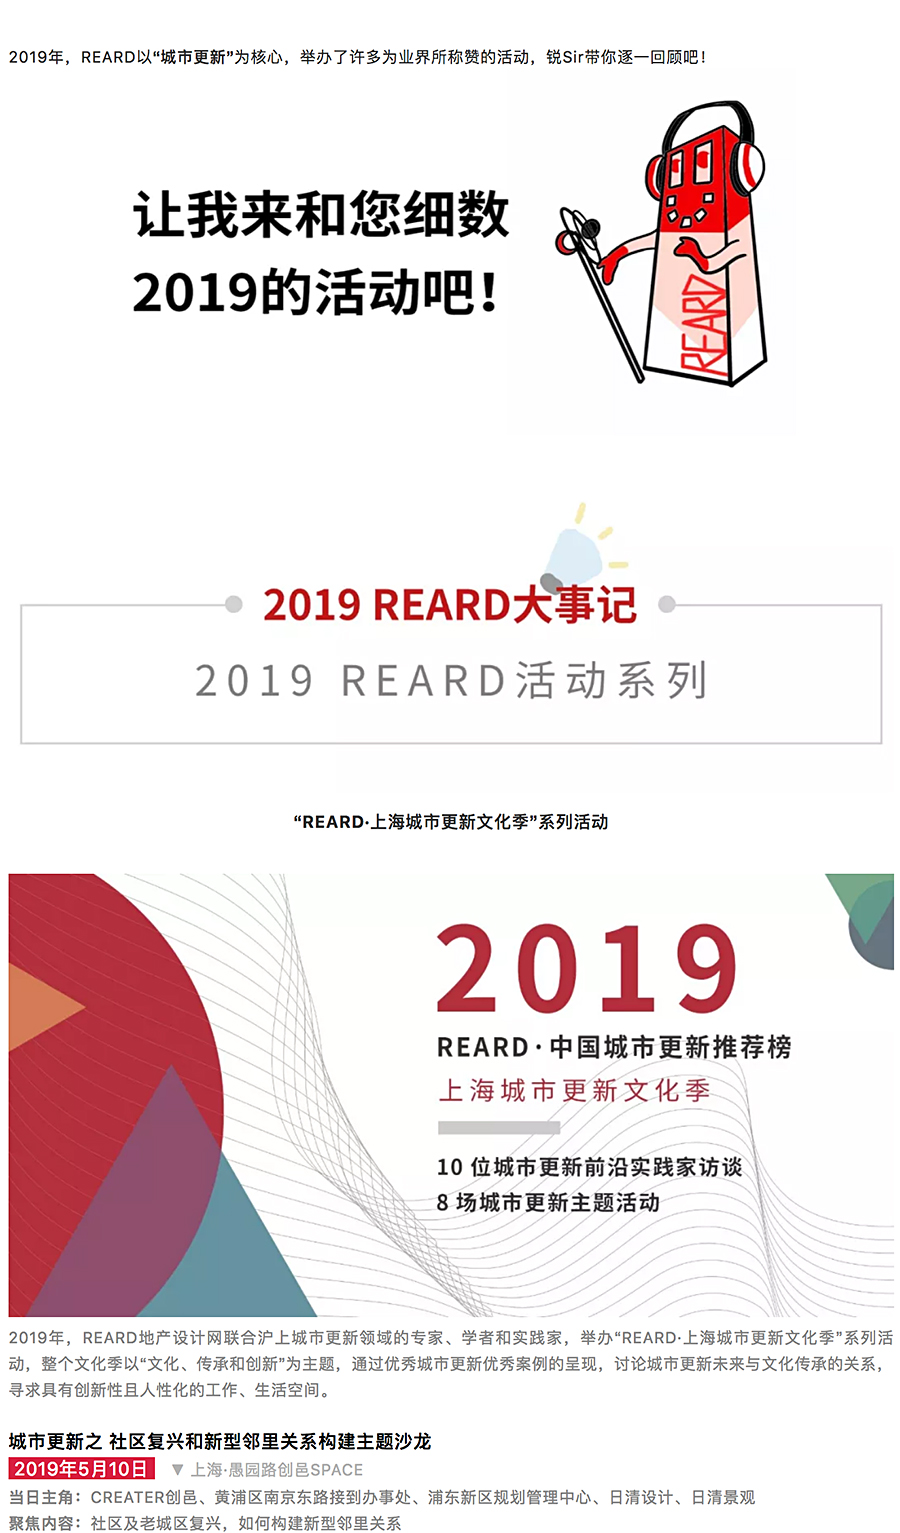 2019-REARD的主角是你么？_-2020-REARD和城市更新同行_0002_图层-3.jpg